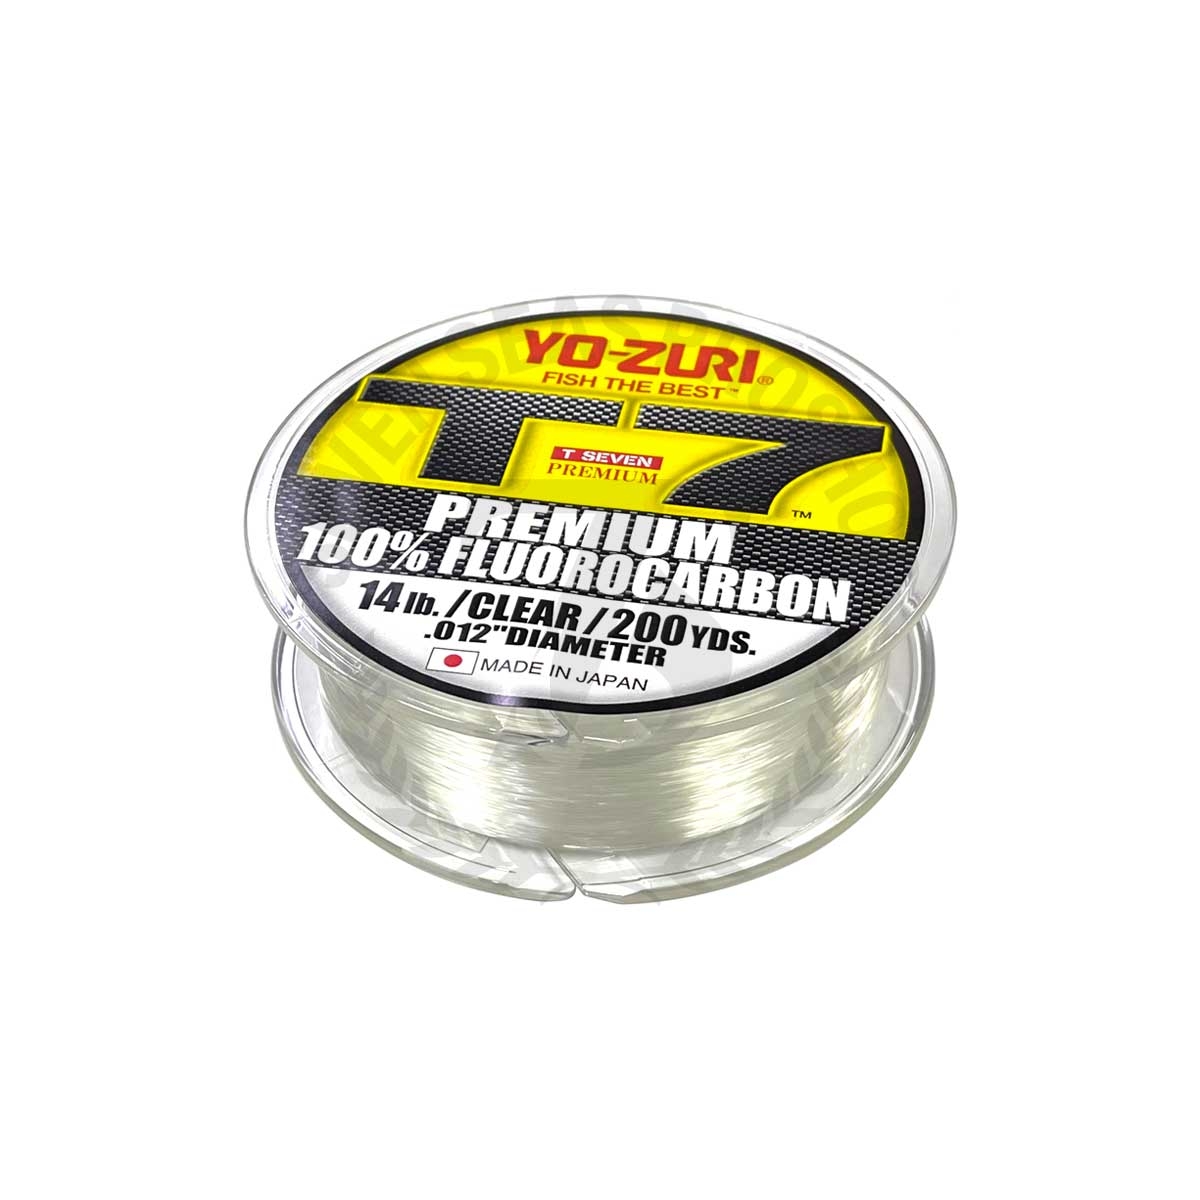 Yo-Zuri T7 Premium 100% Fluorocarbon 200yds #R1417-CL-14lb (Clear